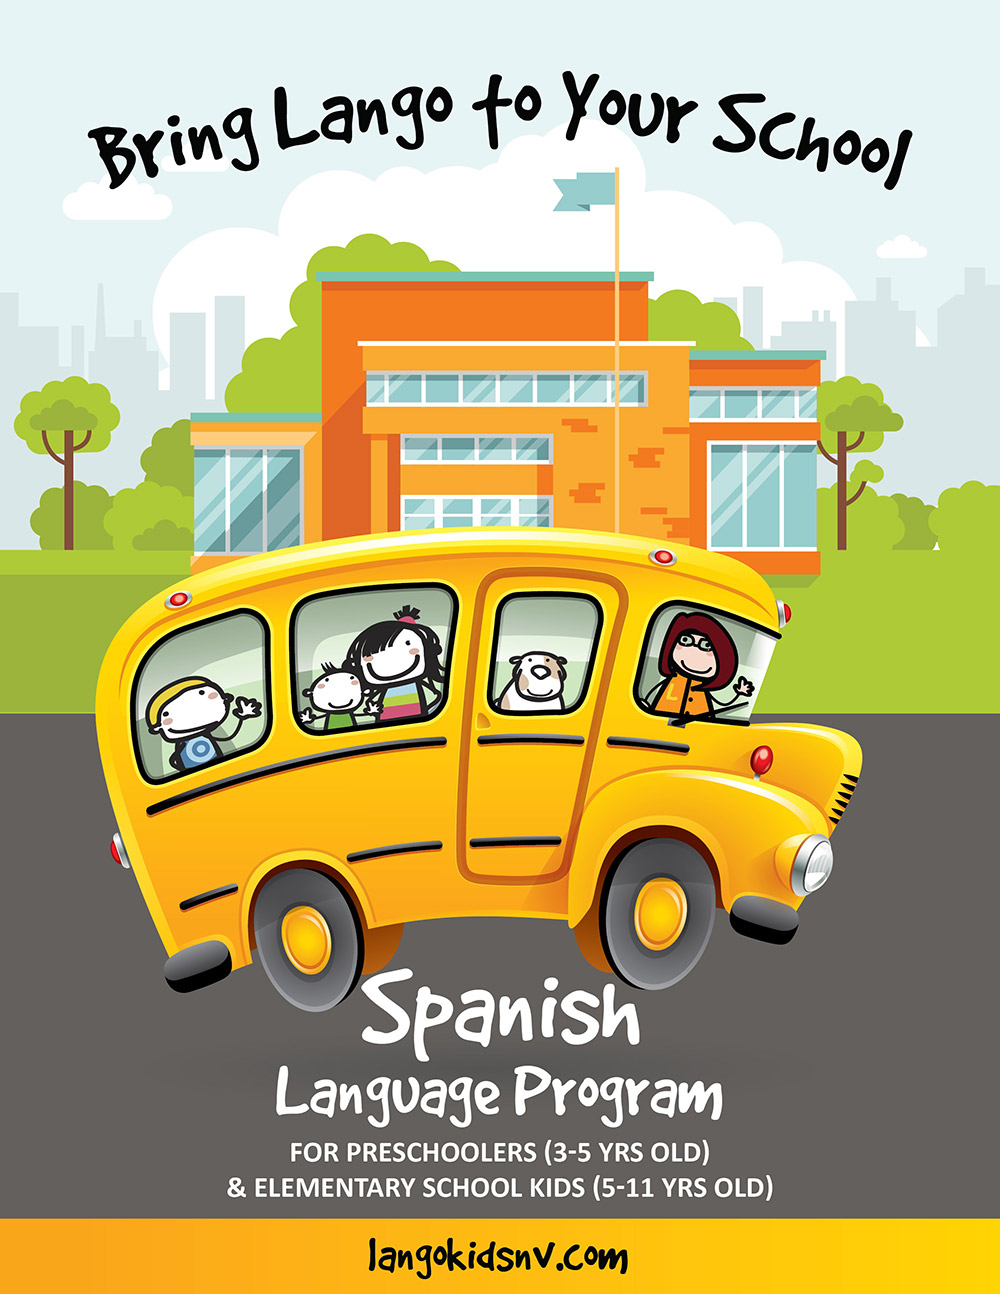 Spanish Immersion Program for Preschool & Elementary School Kids